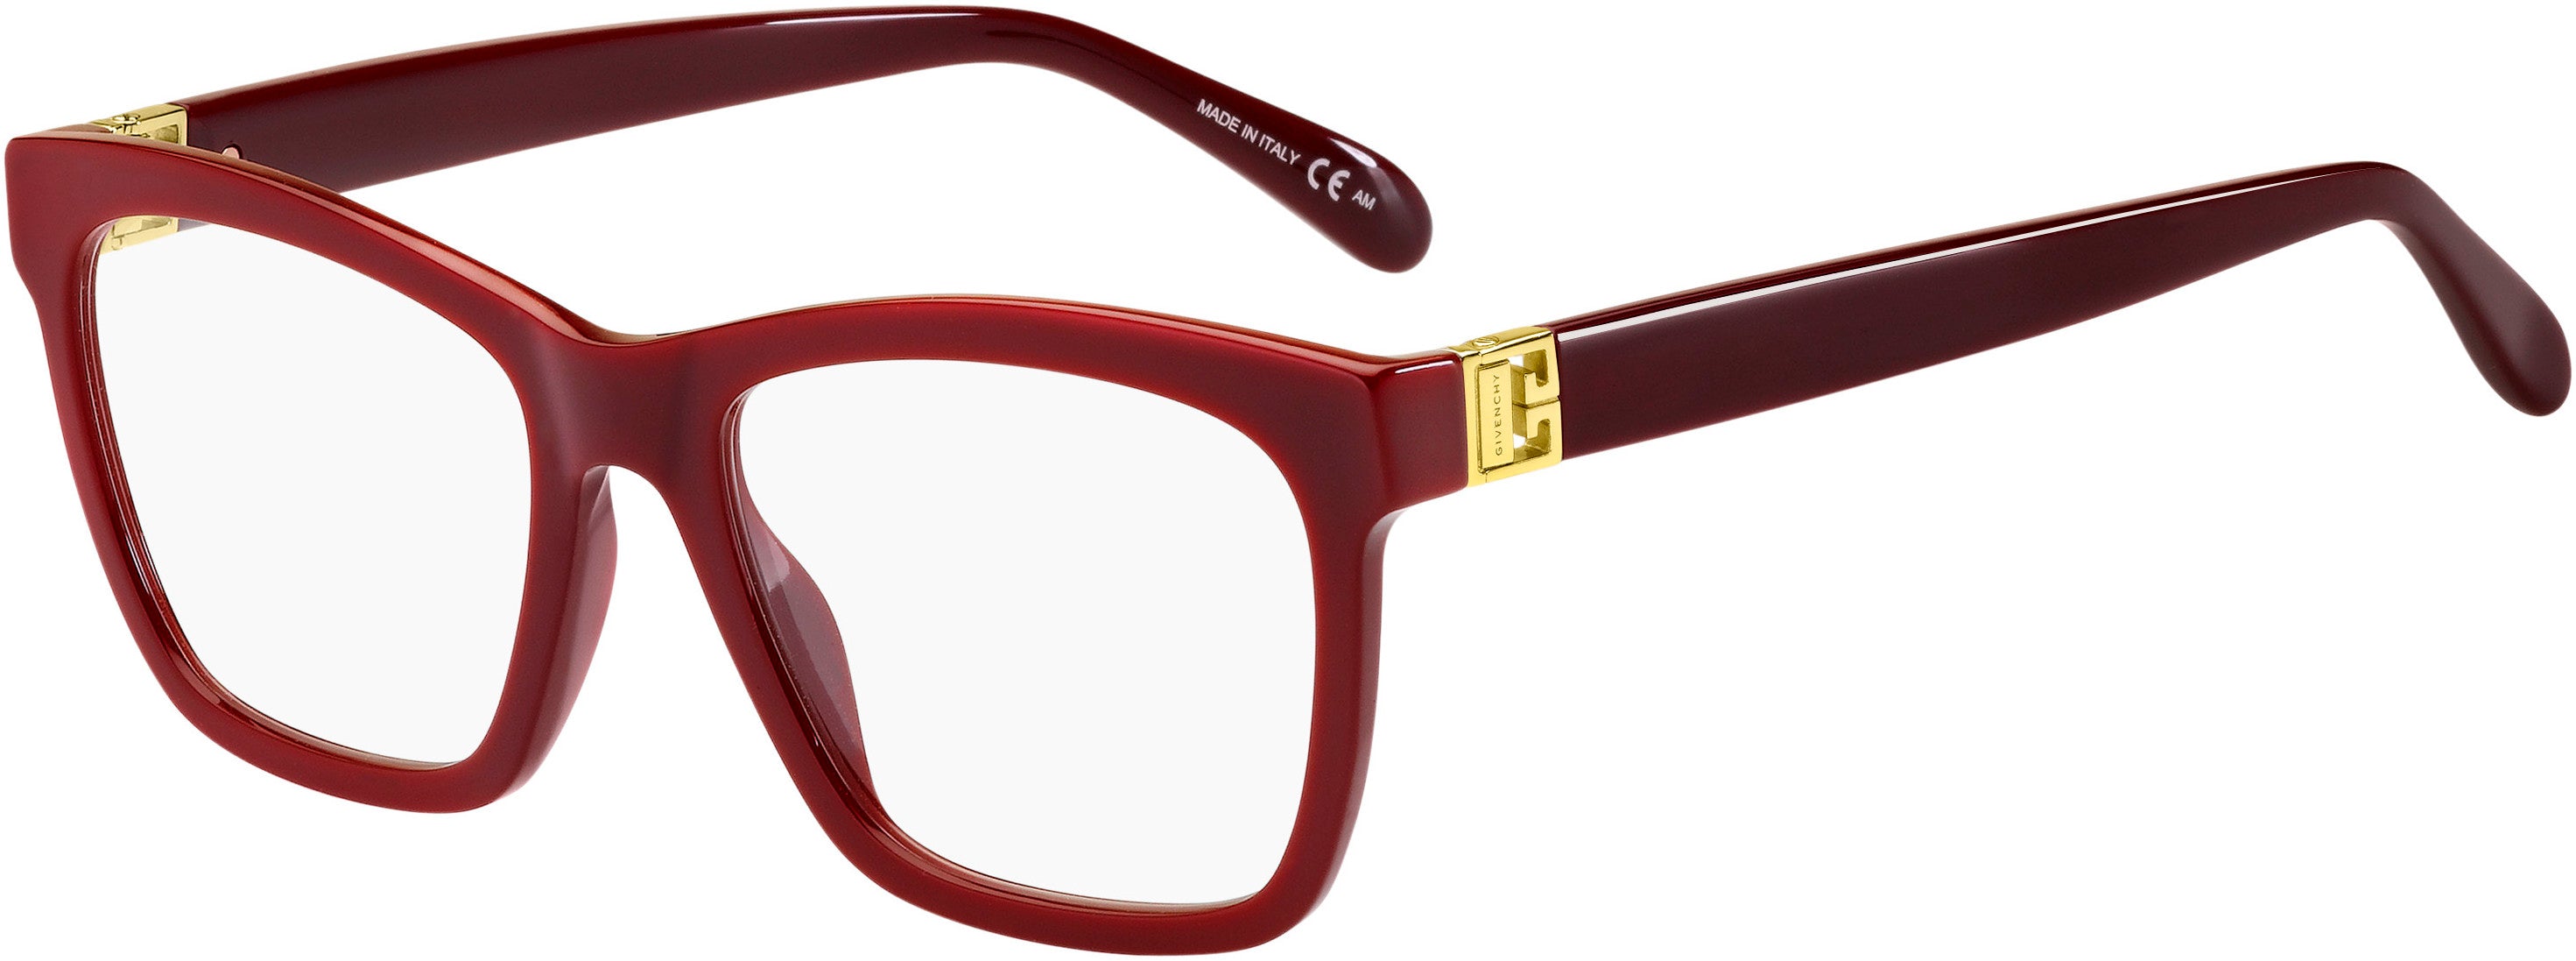  Givenchy 0112 Rectangular Eyeglasses 0LHF-0LHF  Opal Burgundy (00 Demo Lens)